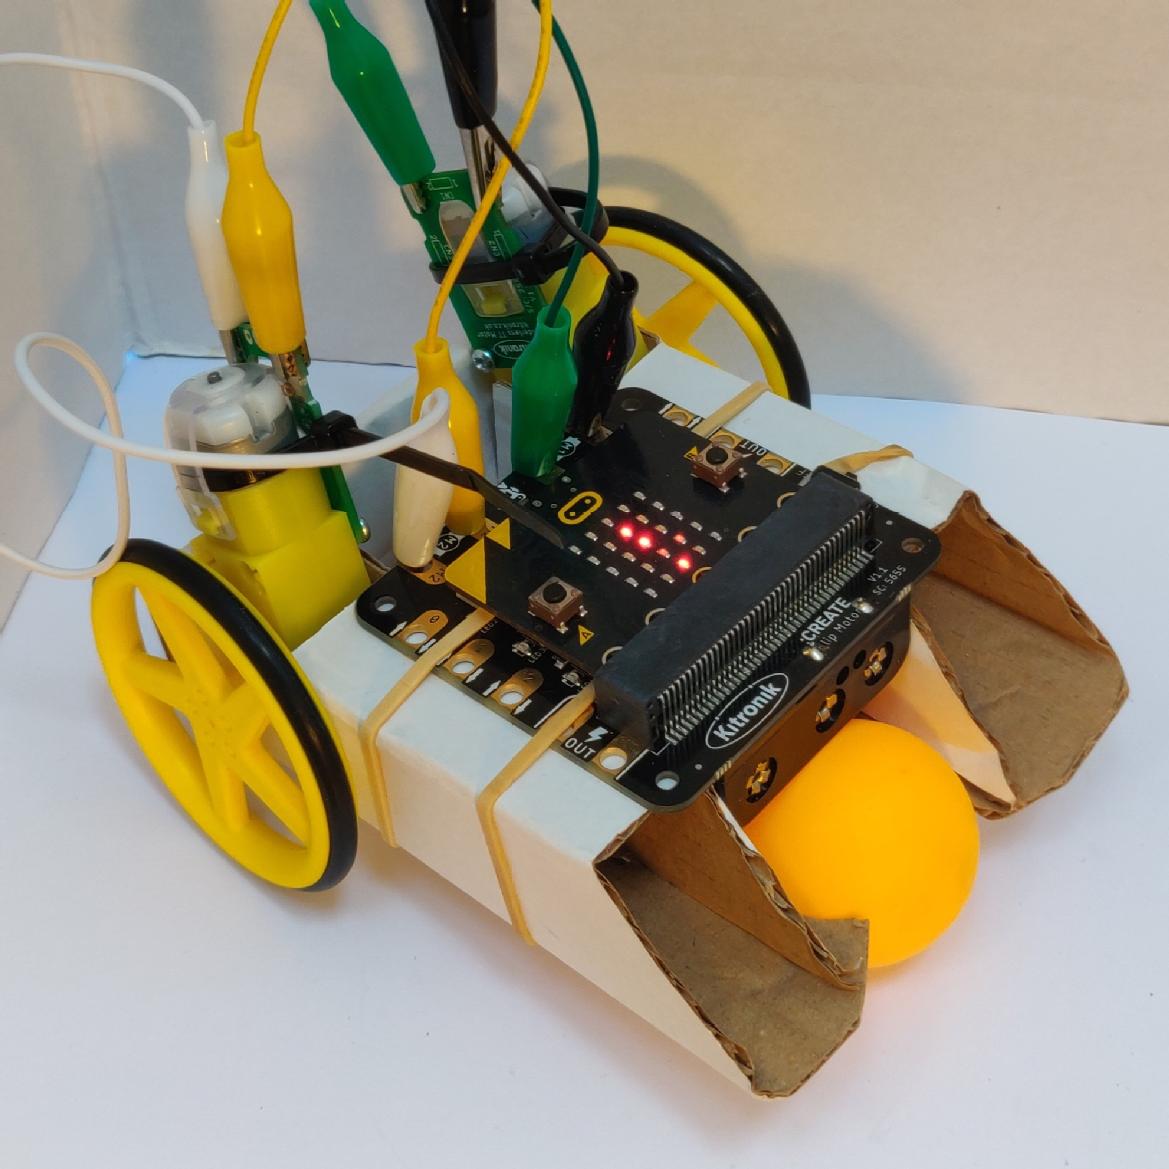 a robotic vehicle kit